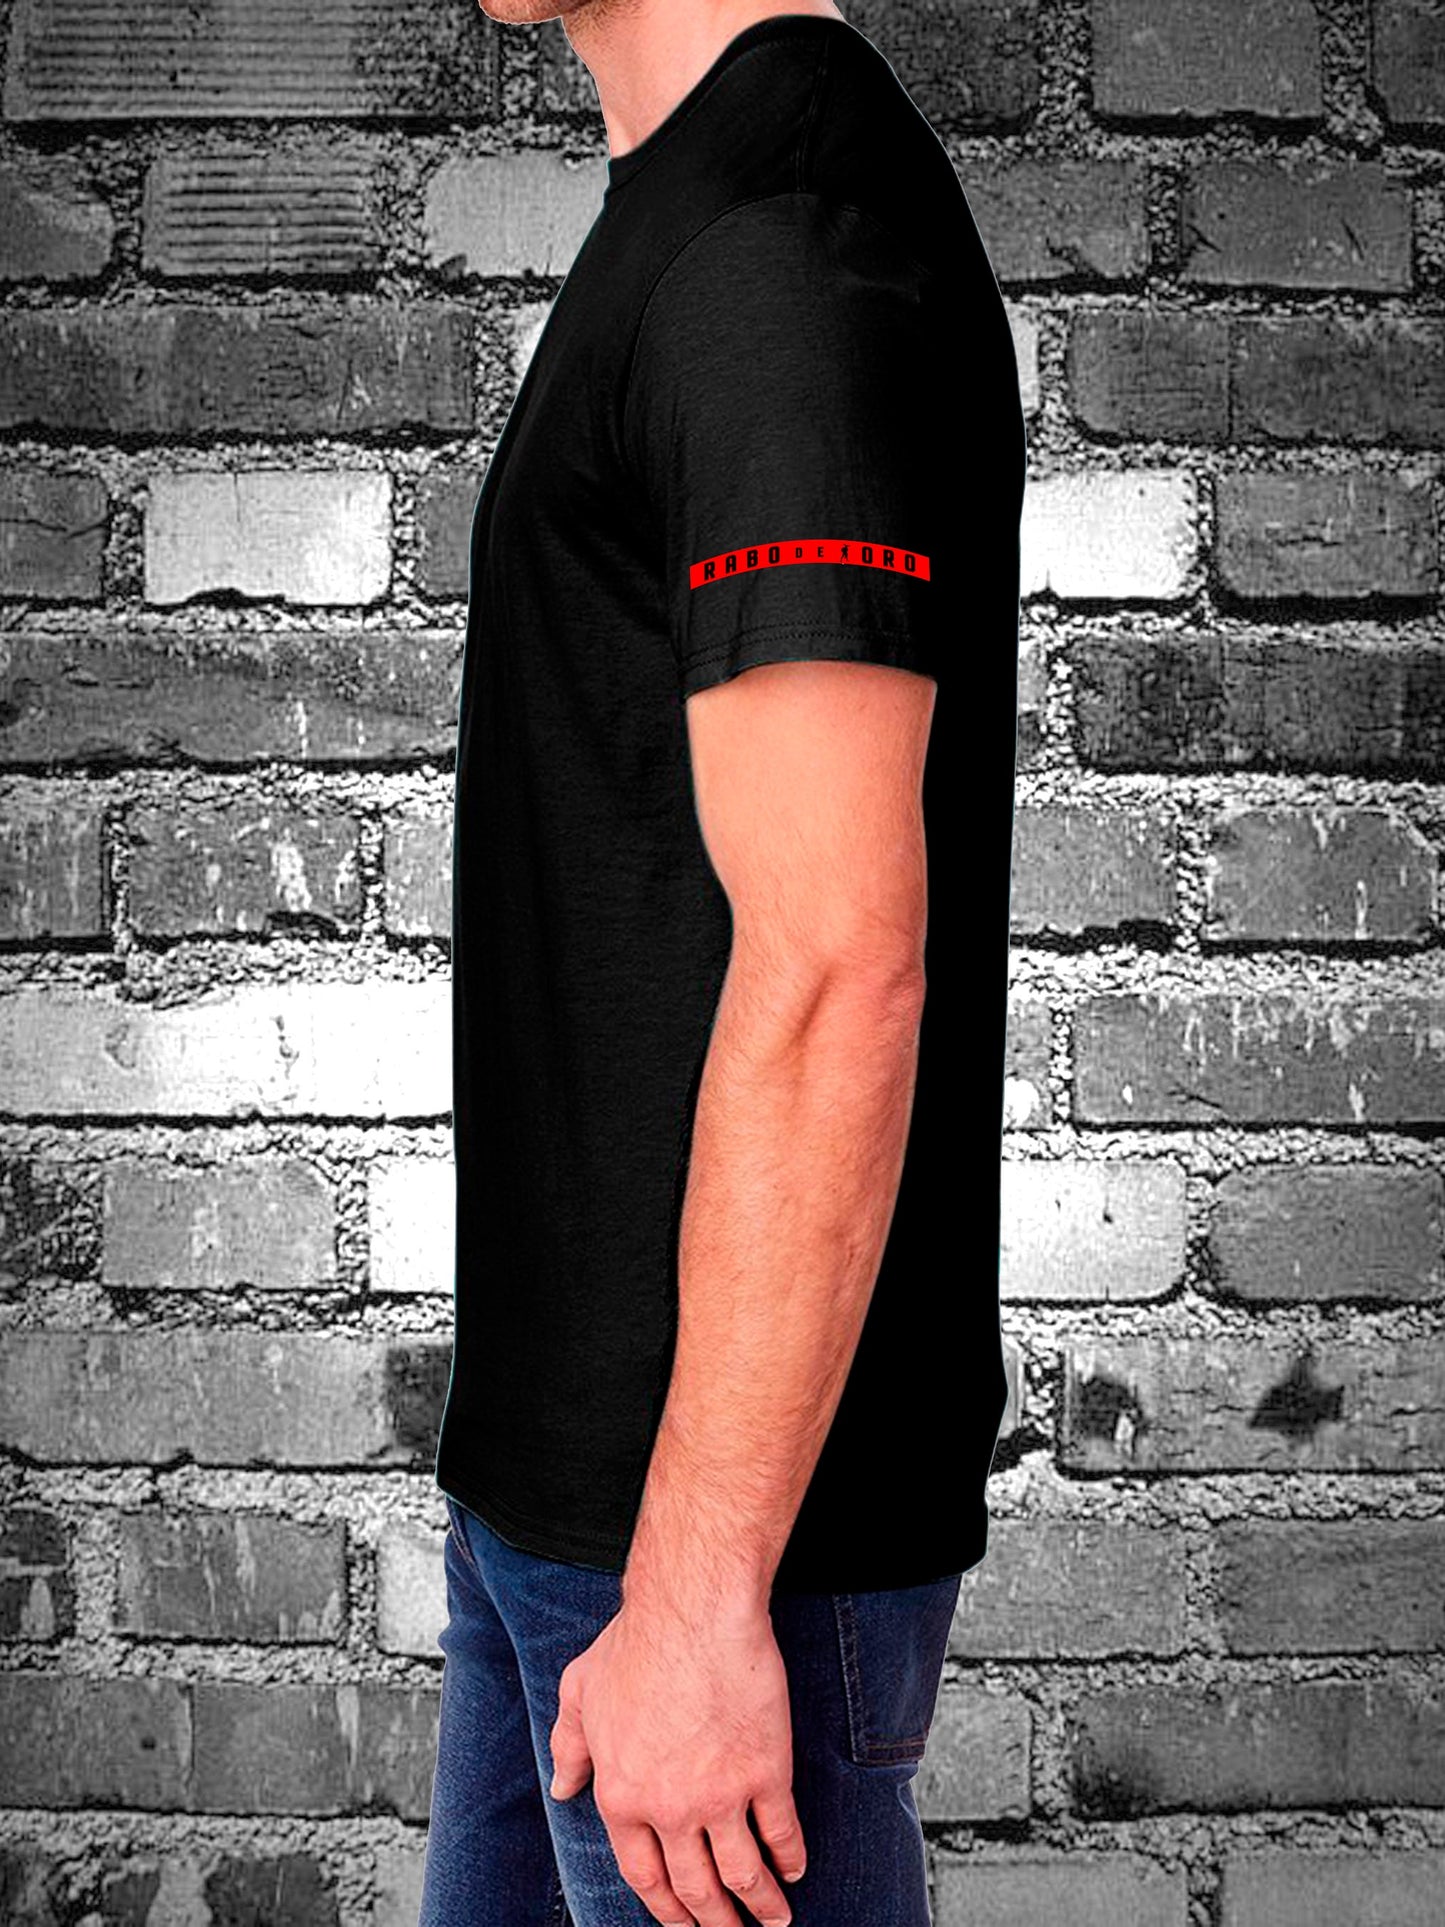 Camiseta negra EXHIBITIONIST PIG con detalles BDSM Hanky ​​Code